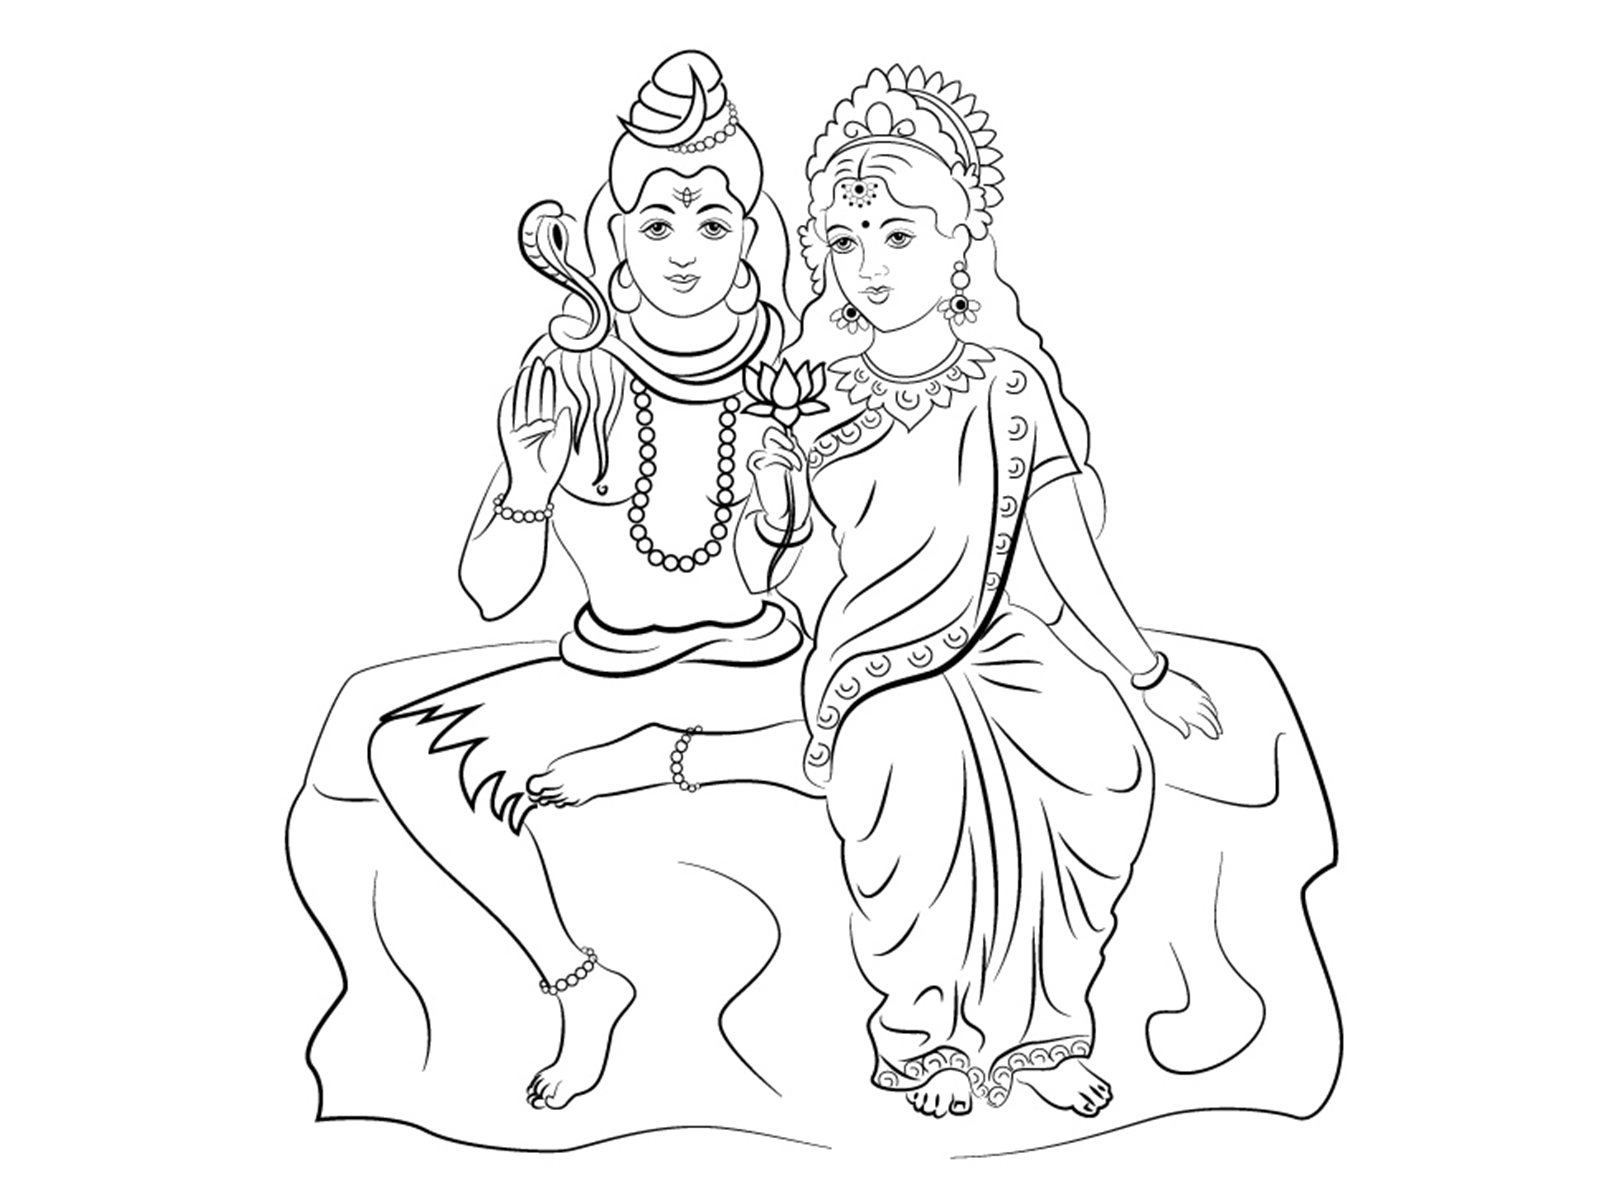 Lord Shiva Parvati Image & Photo (Free Trial) | Bigstock